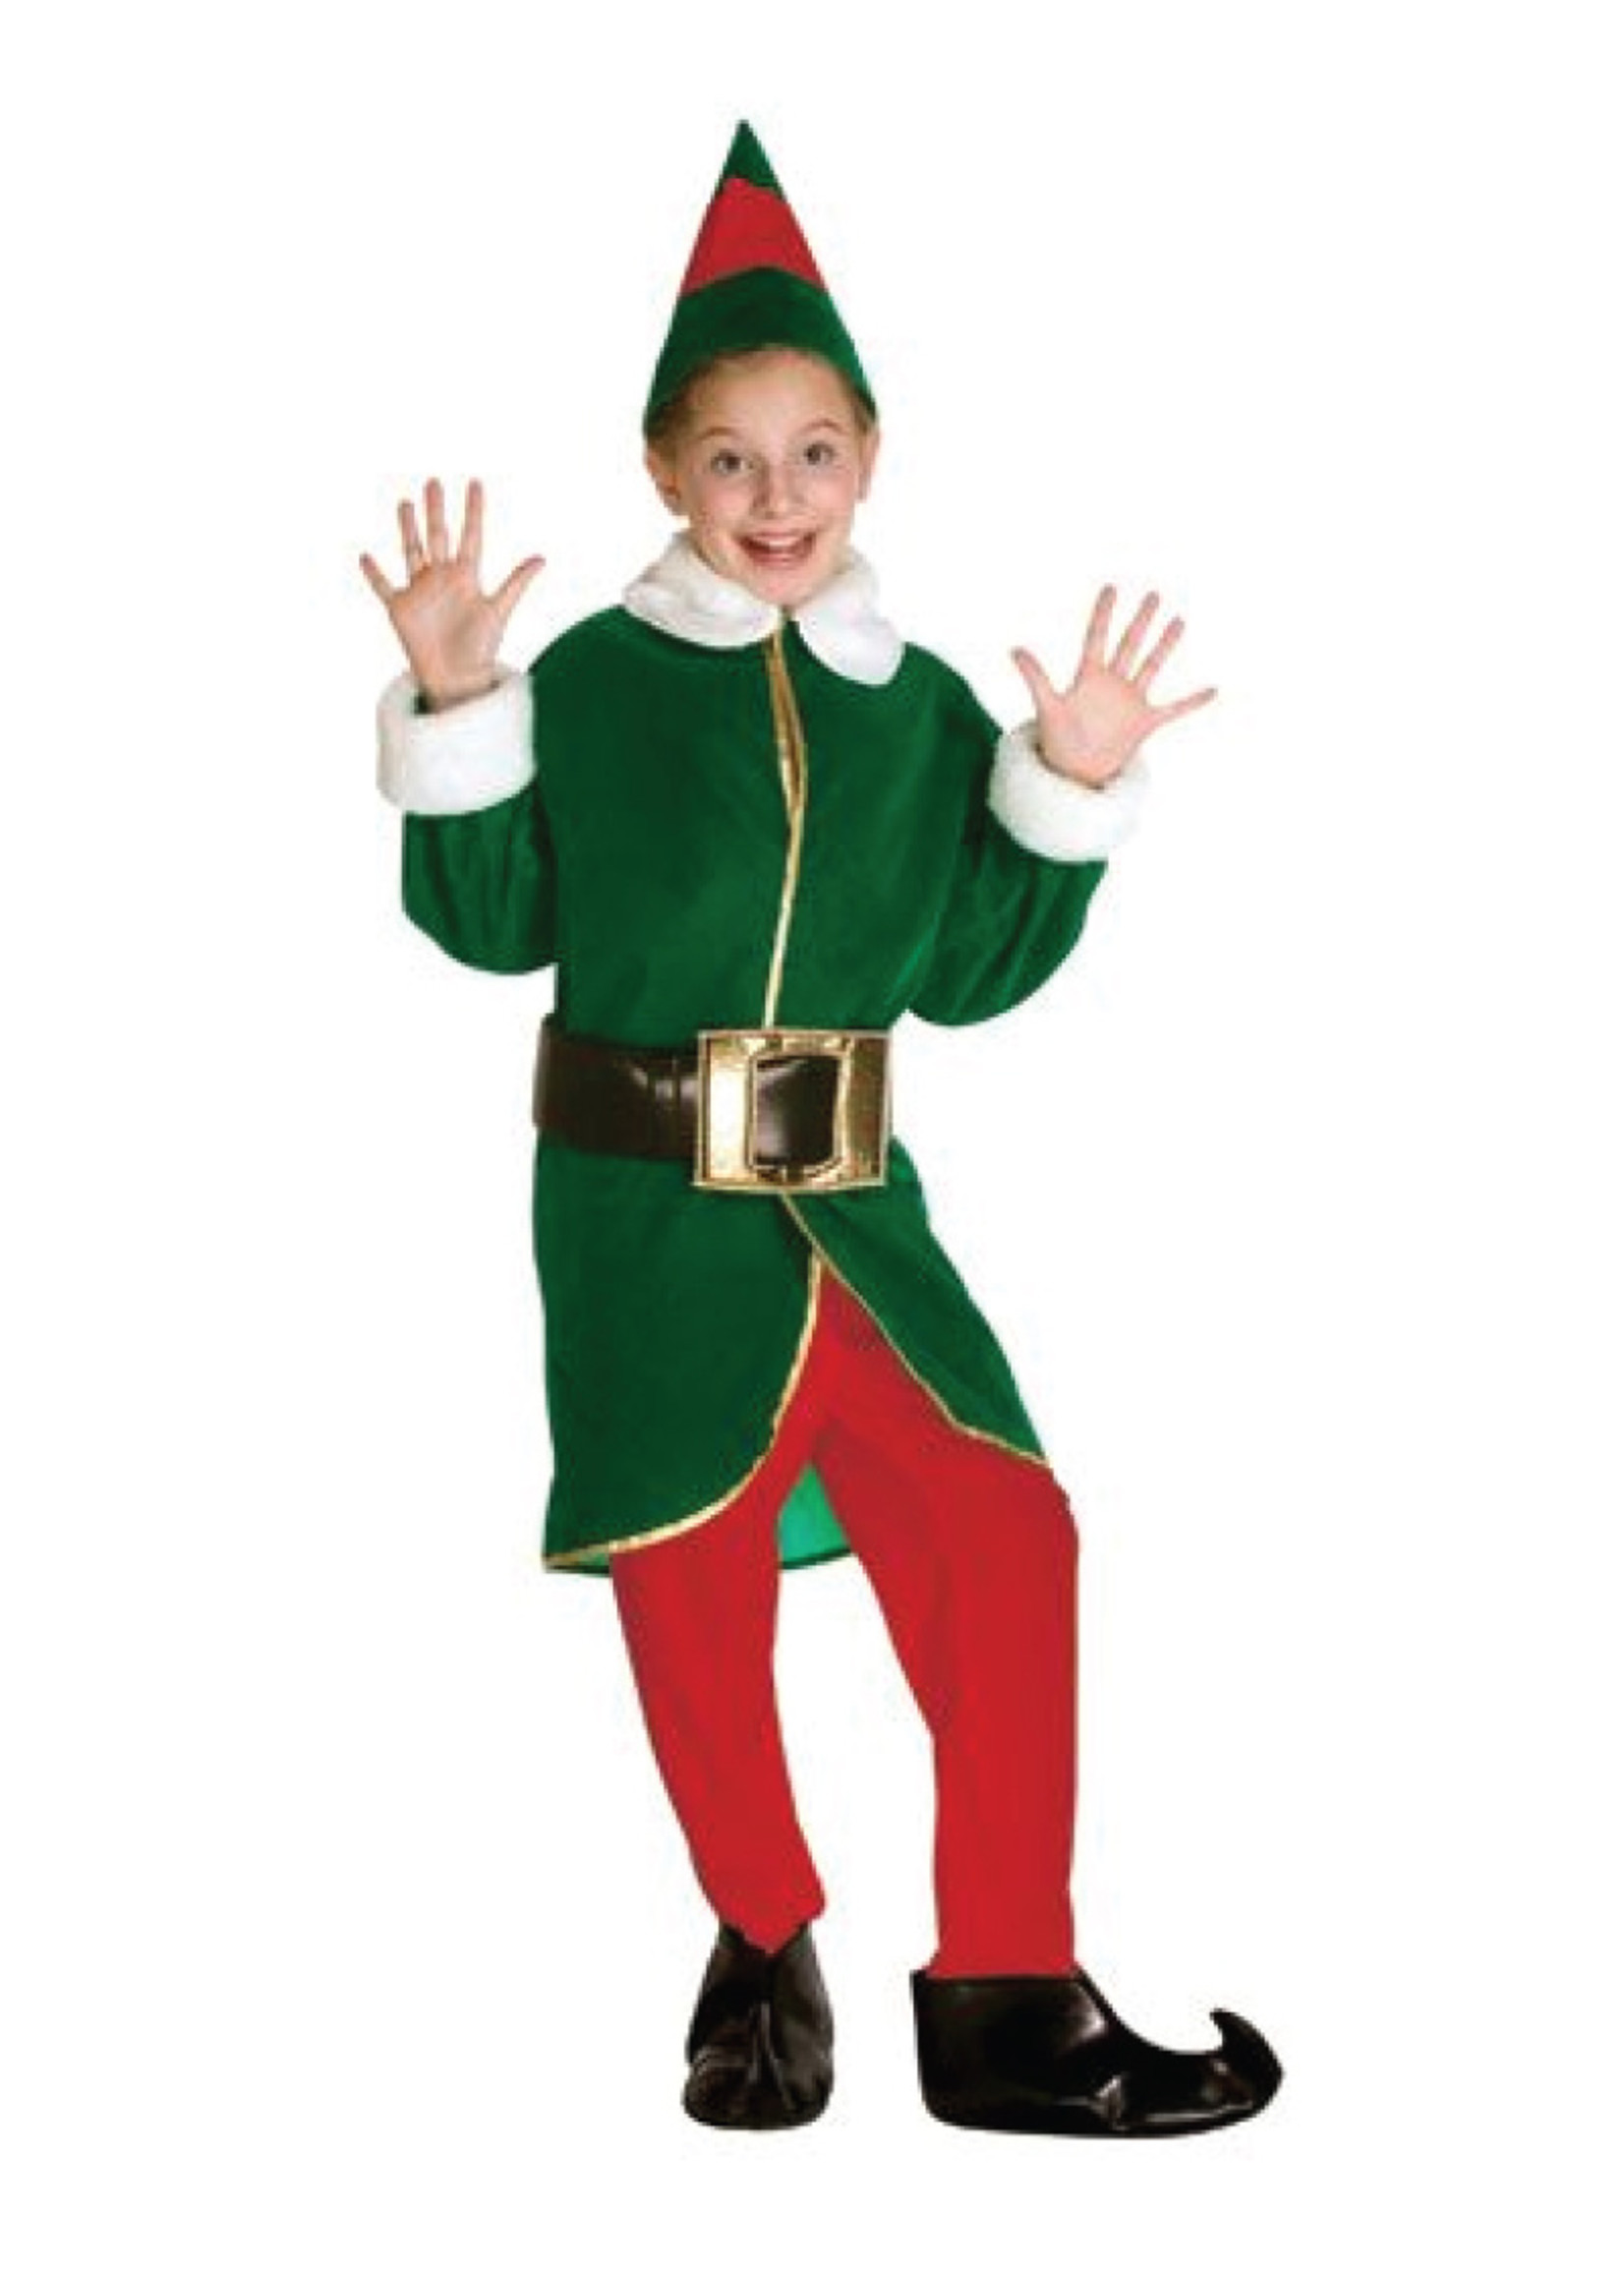 RASTA IMPOSTA PRODUCTS Elf Deluxe Costume - Child